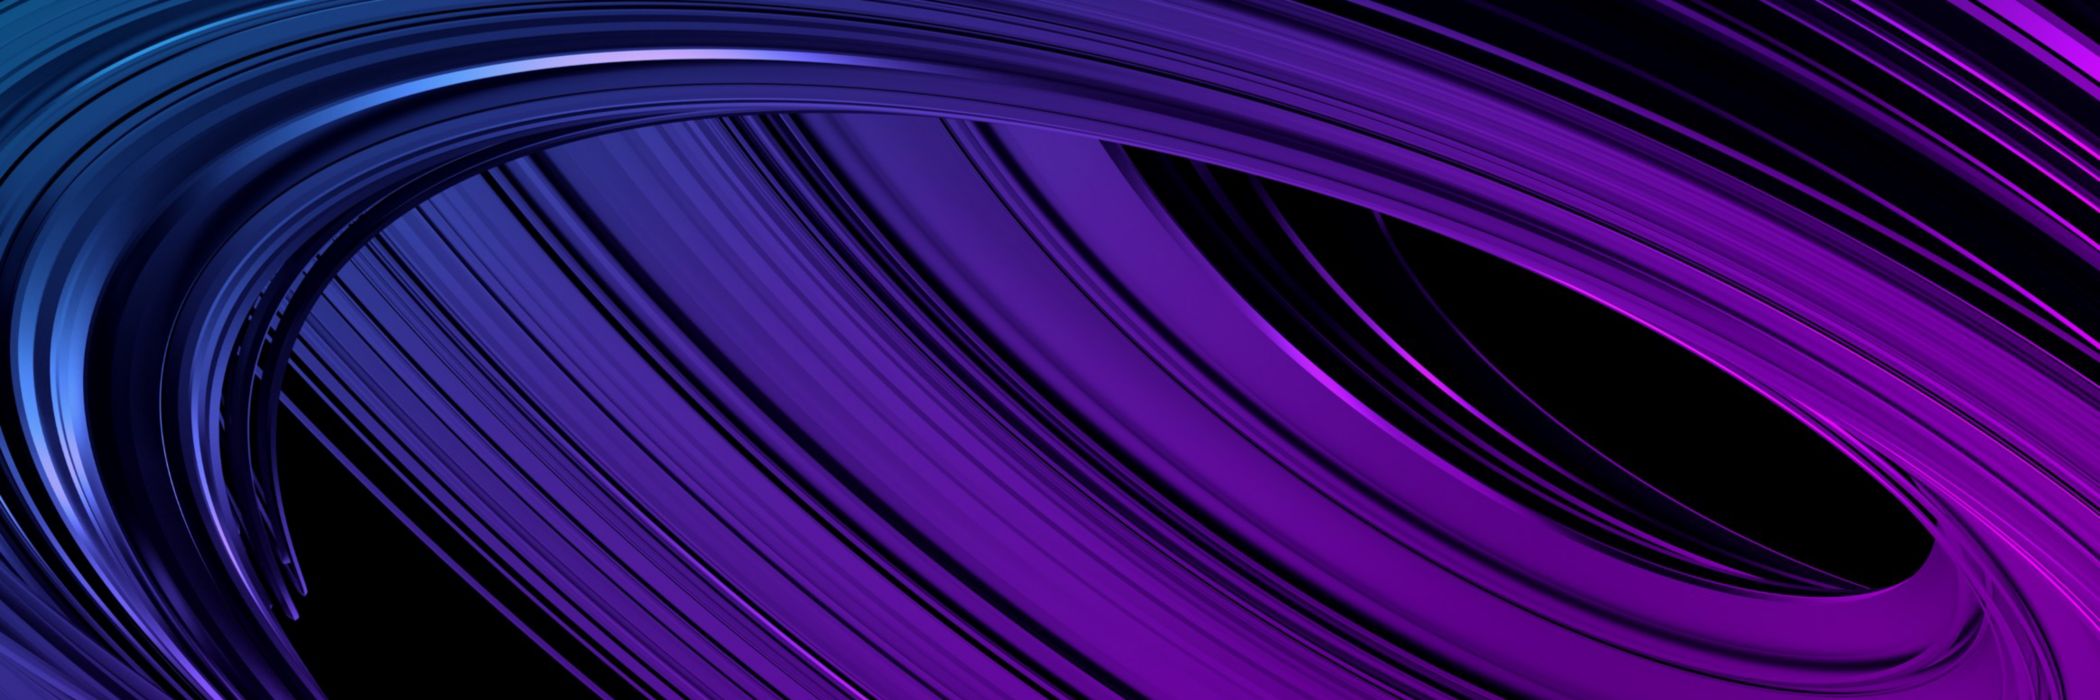 purple navy blue texture image